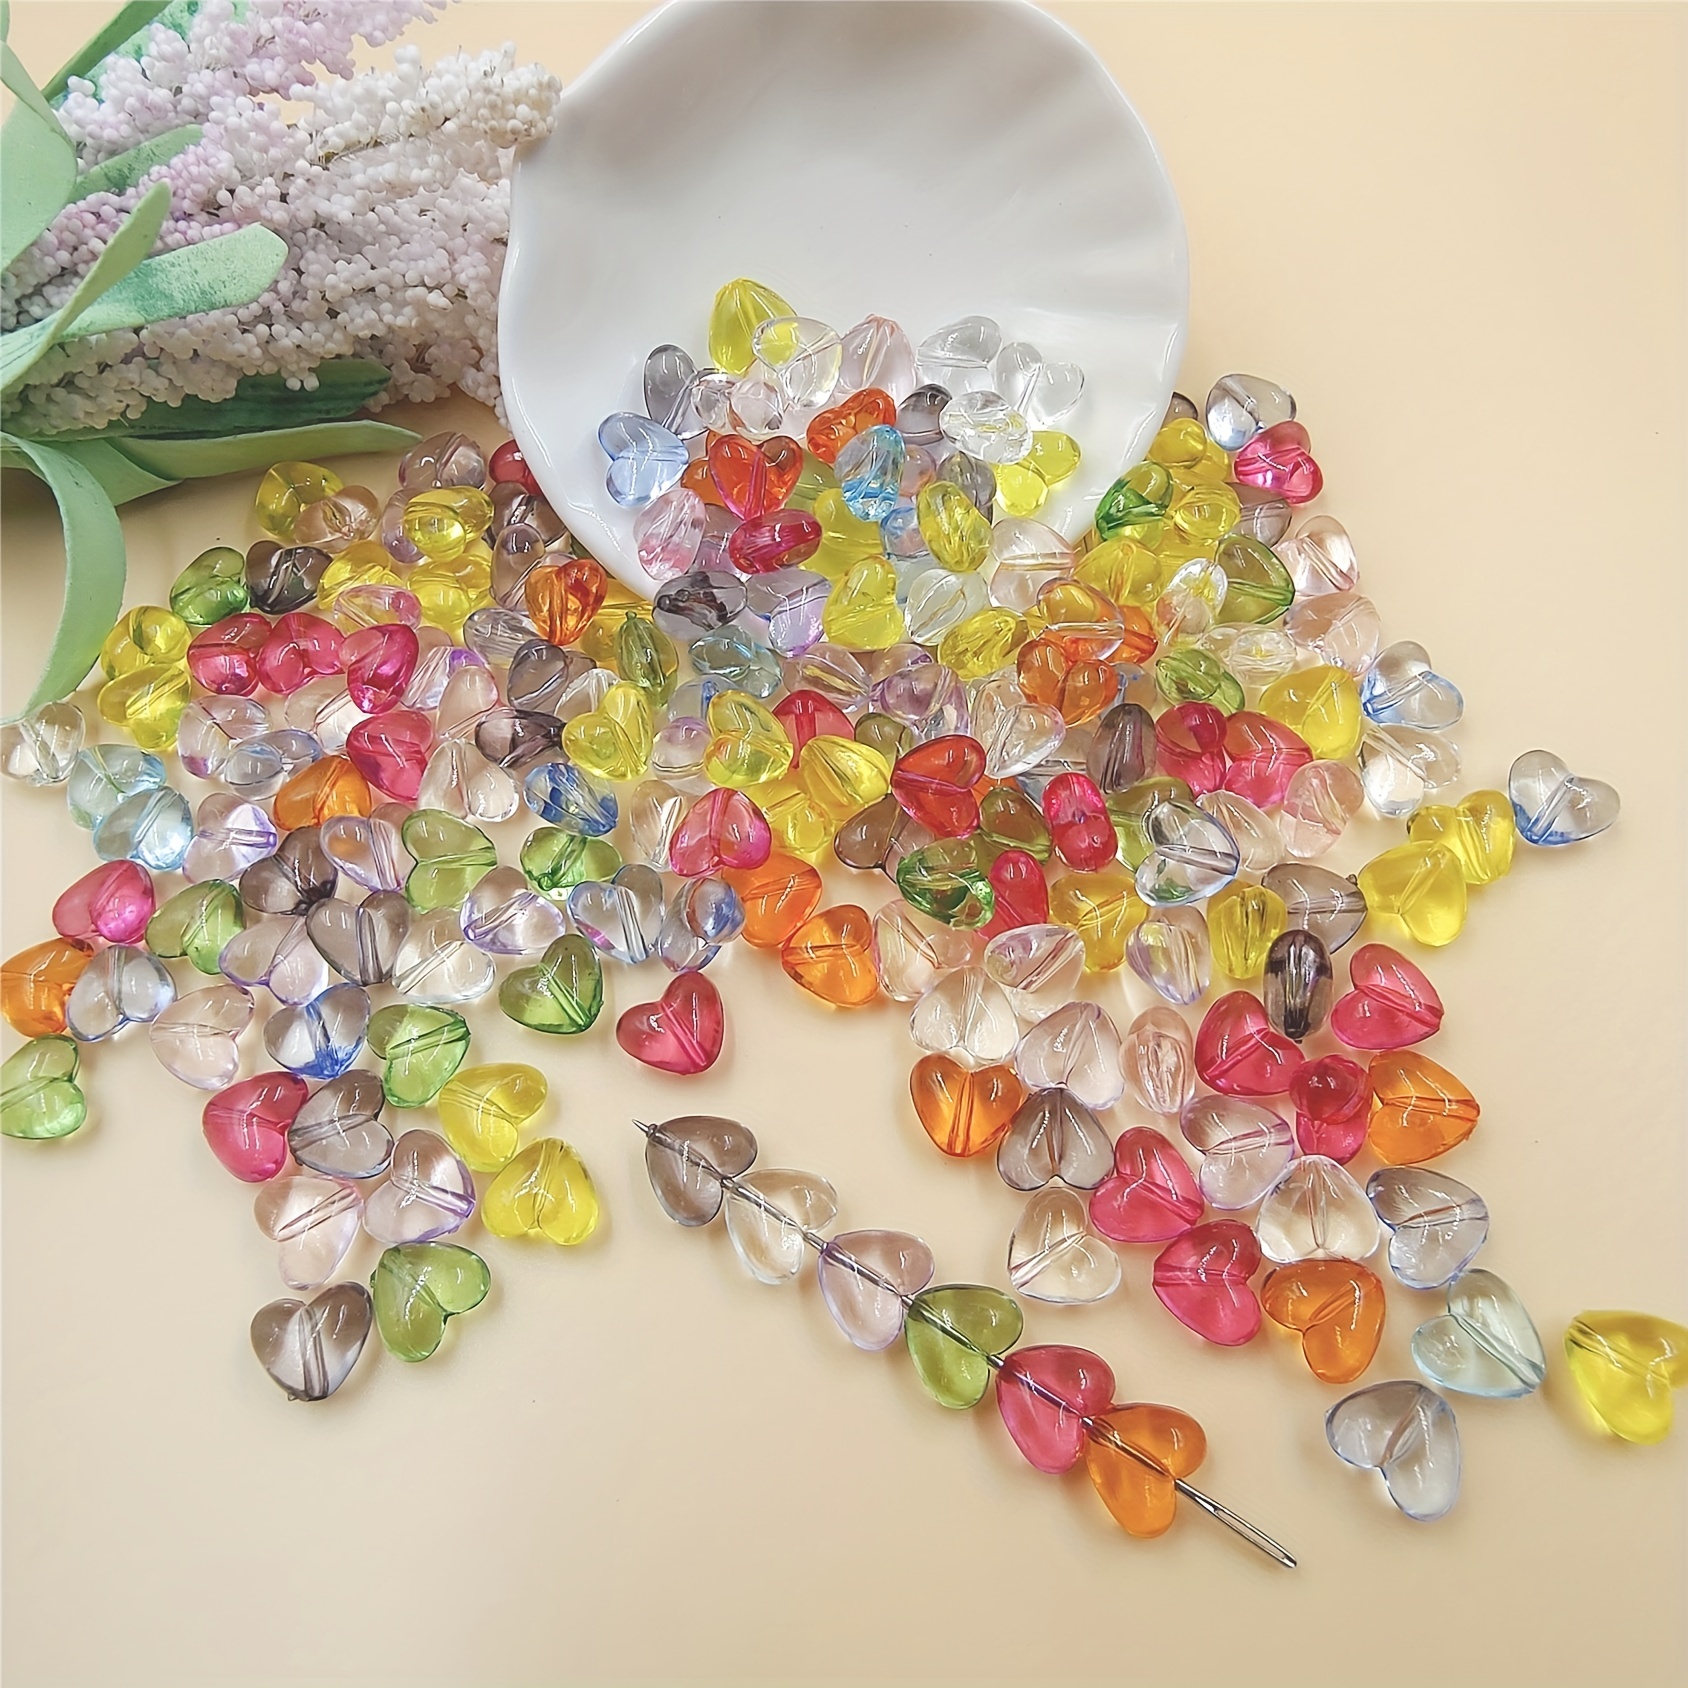 Acrylic Bracelet Accessories, Heart Beads Jewelry Making